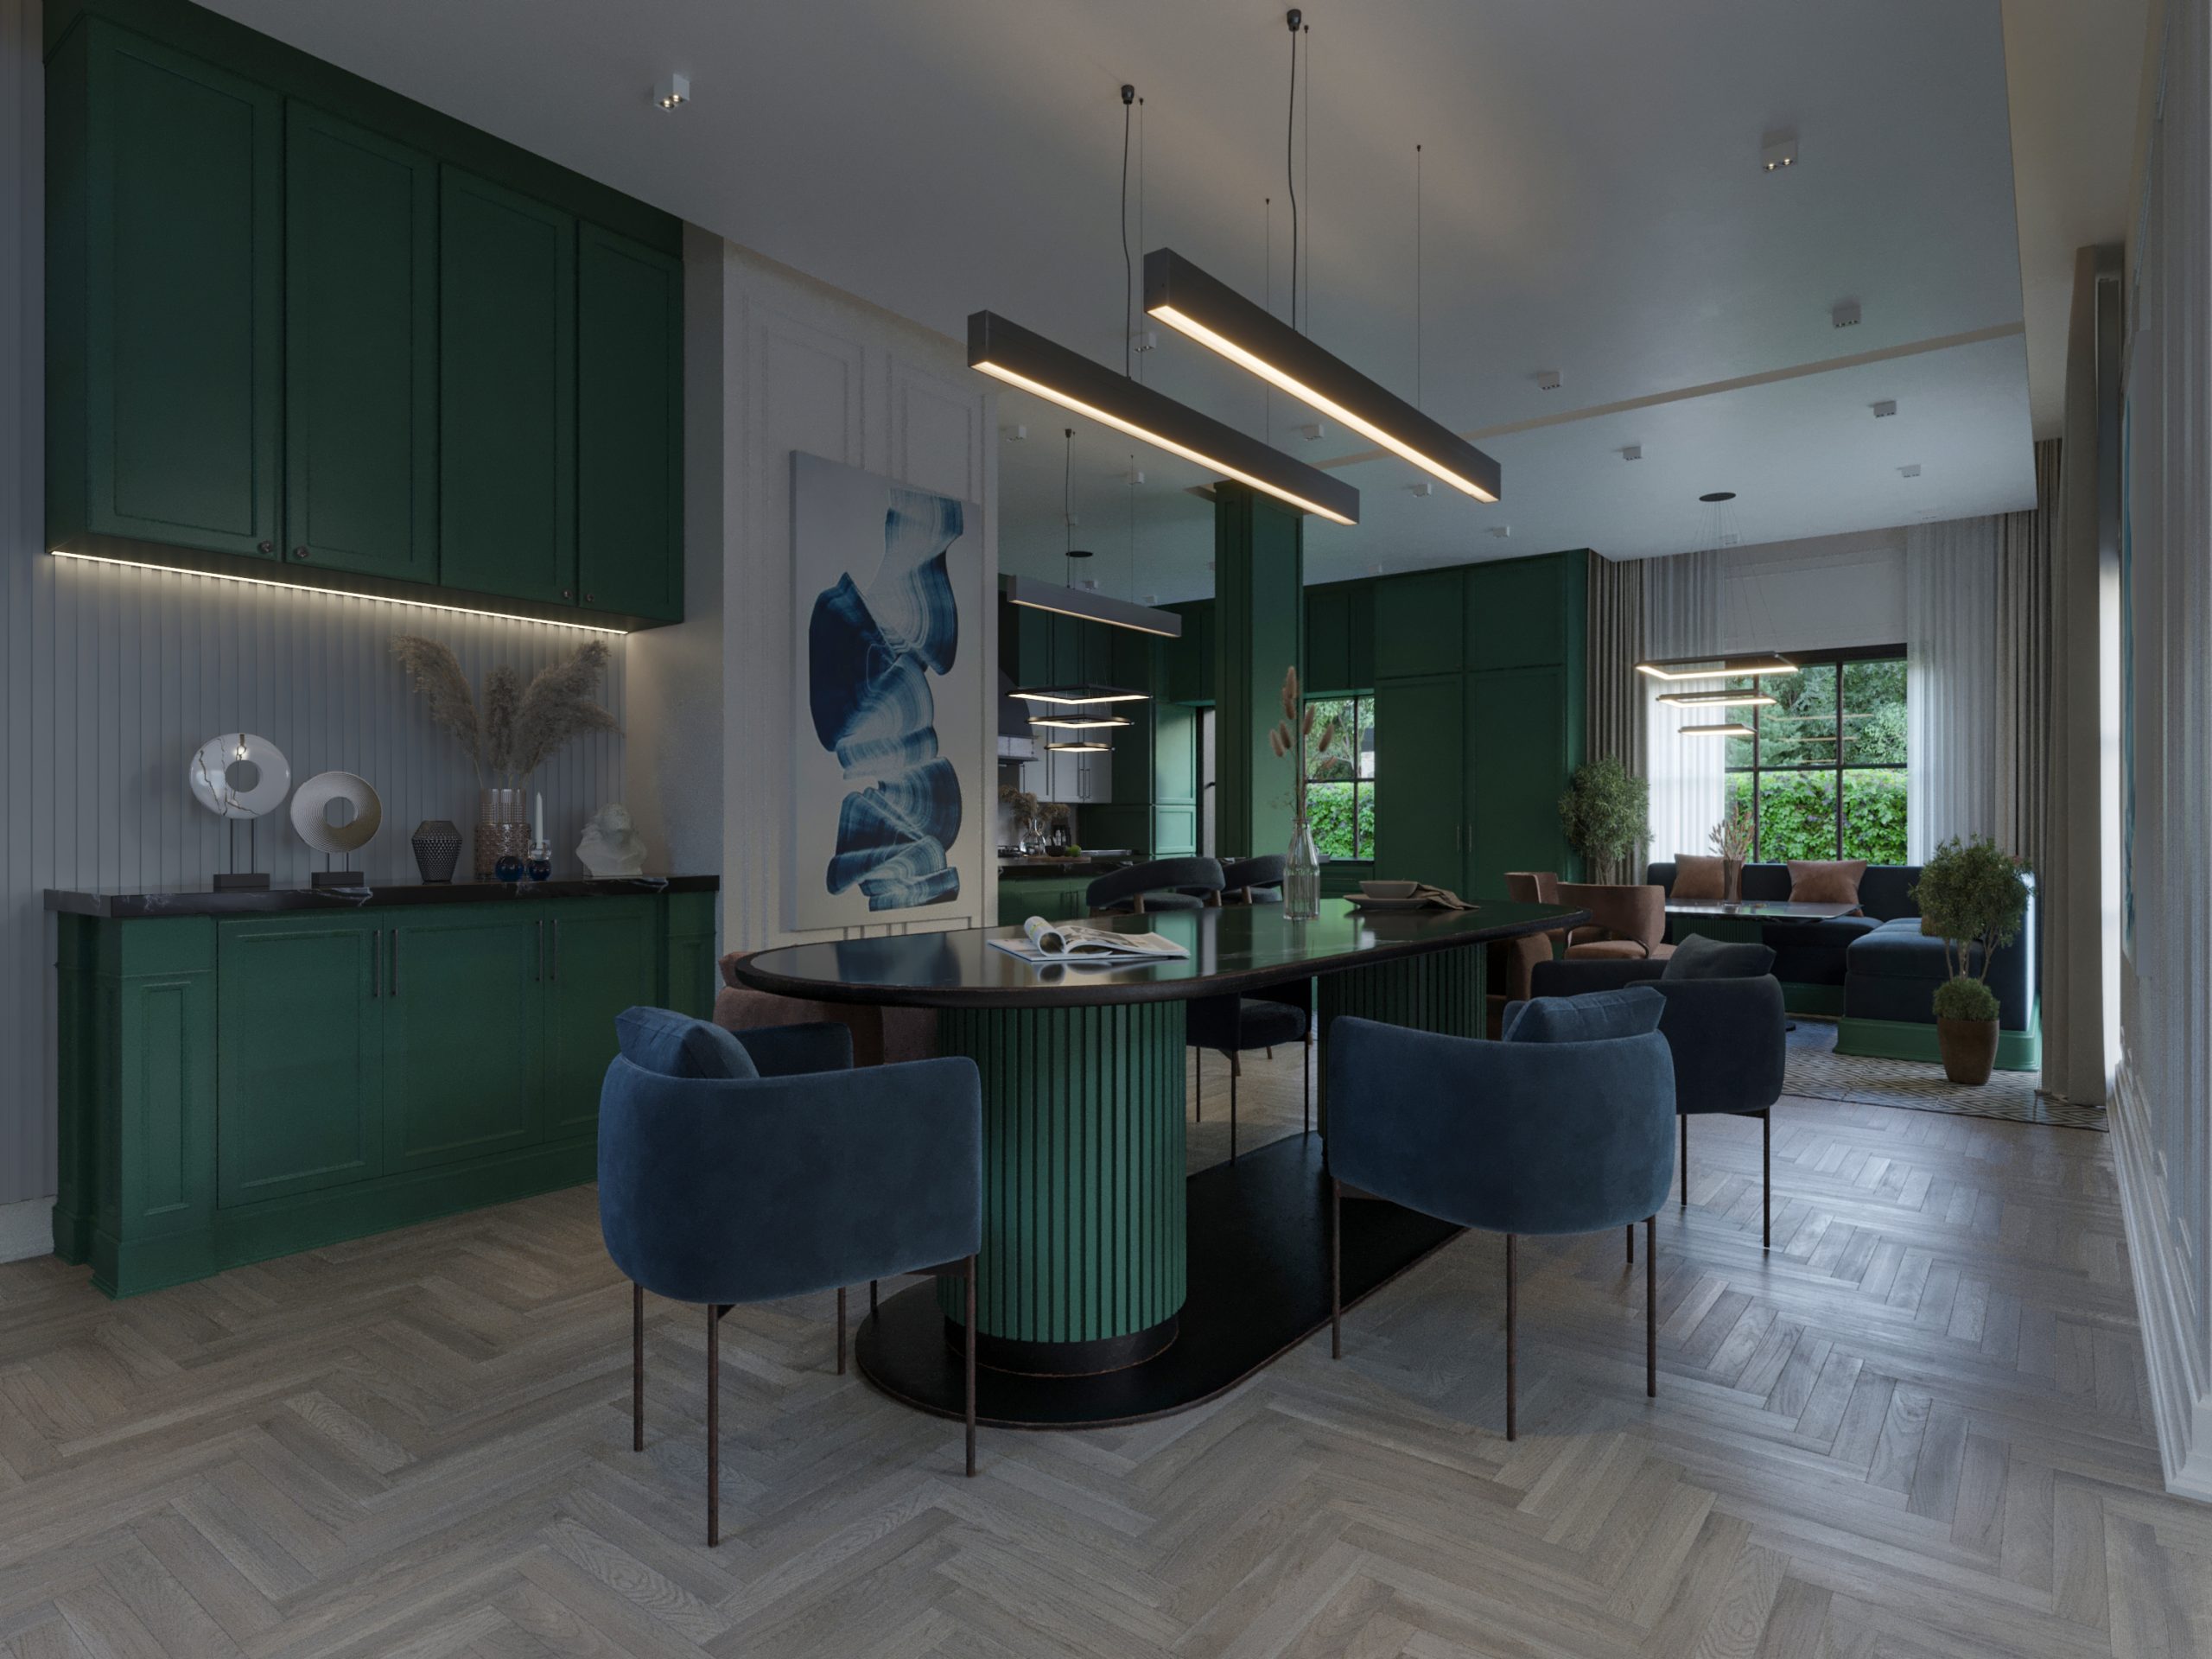 STONE LIVING ROOM DESIGN- kitchen - table design - green